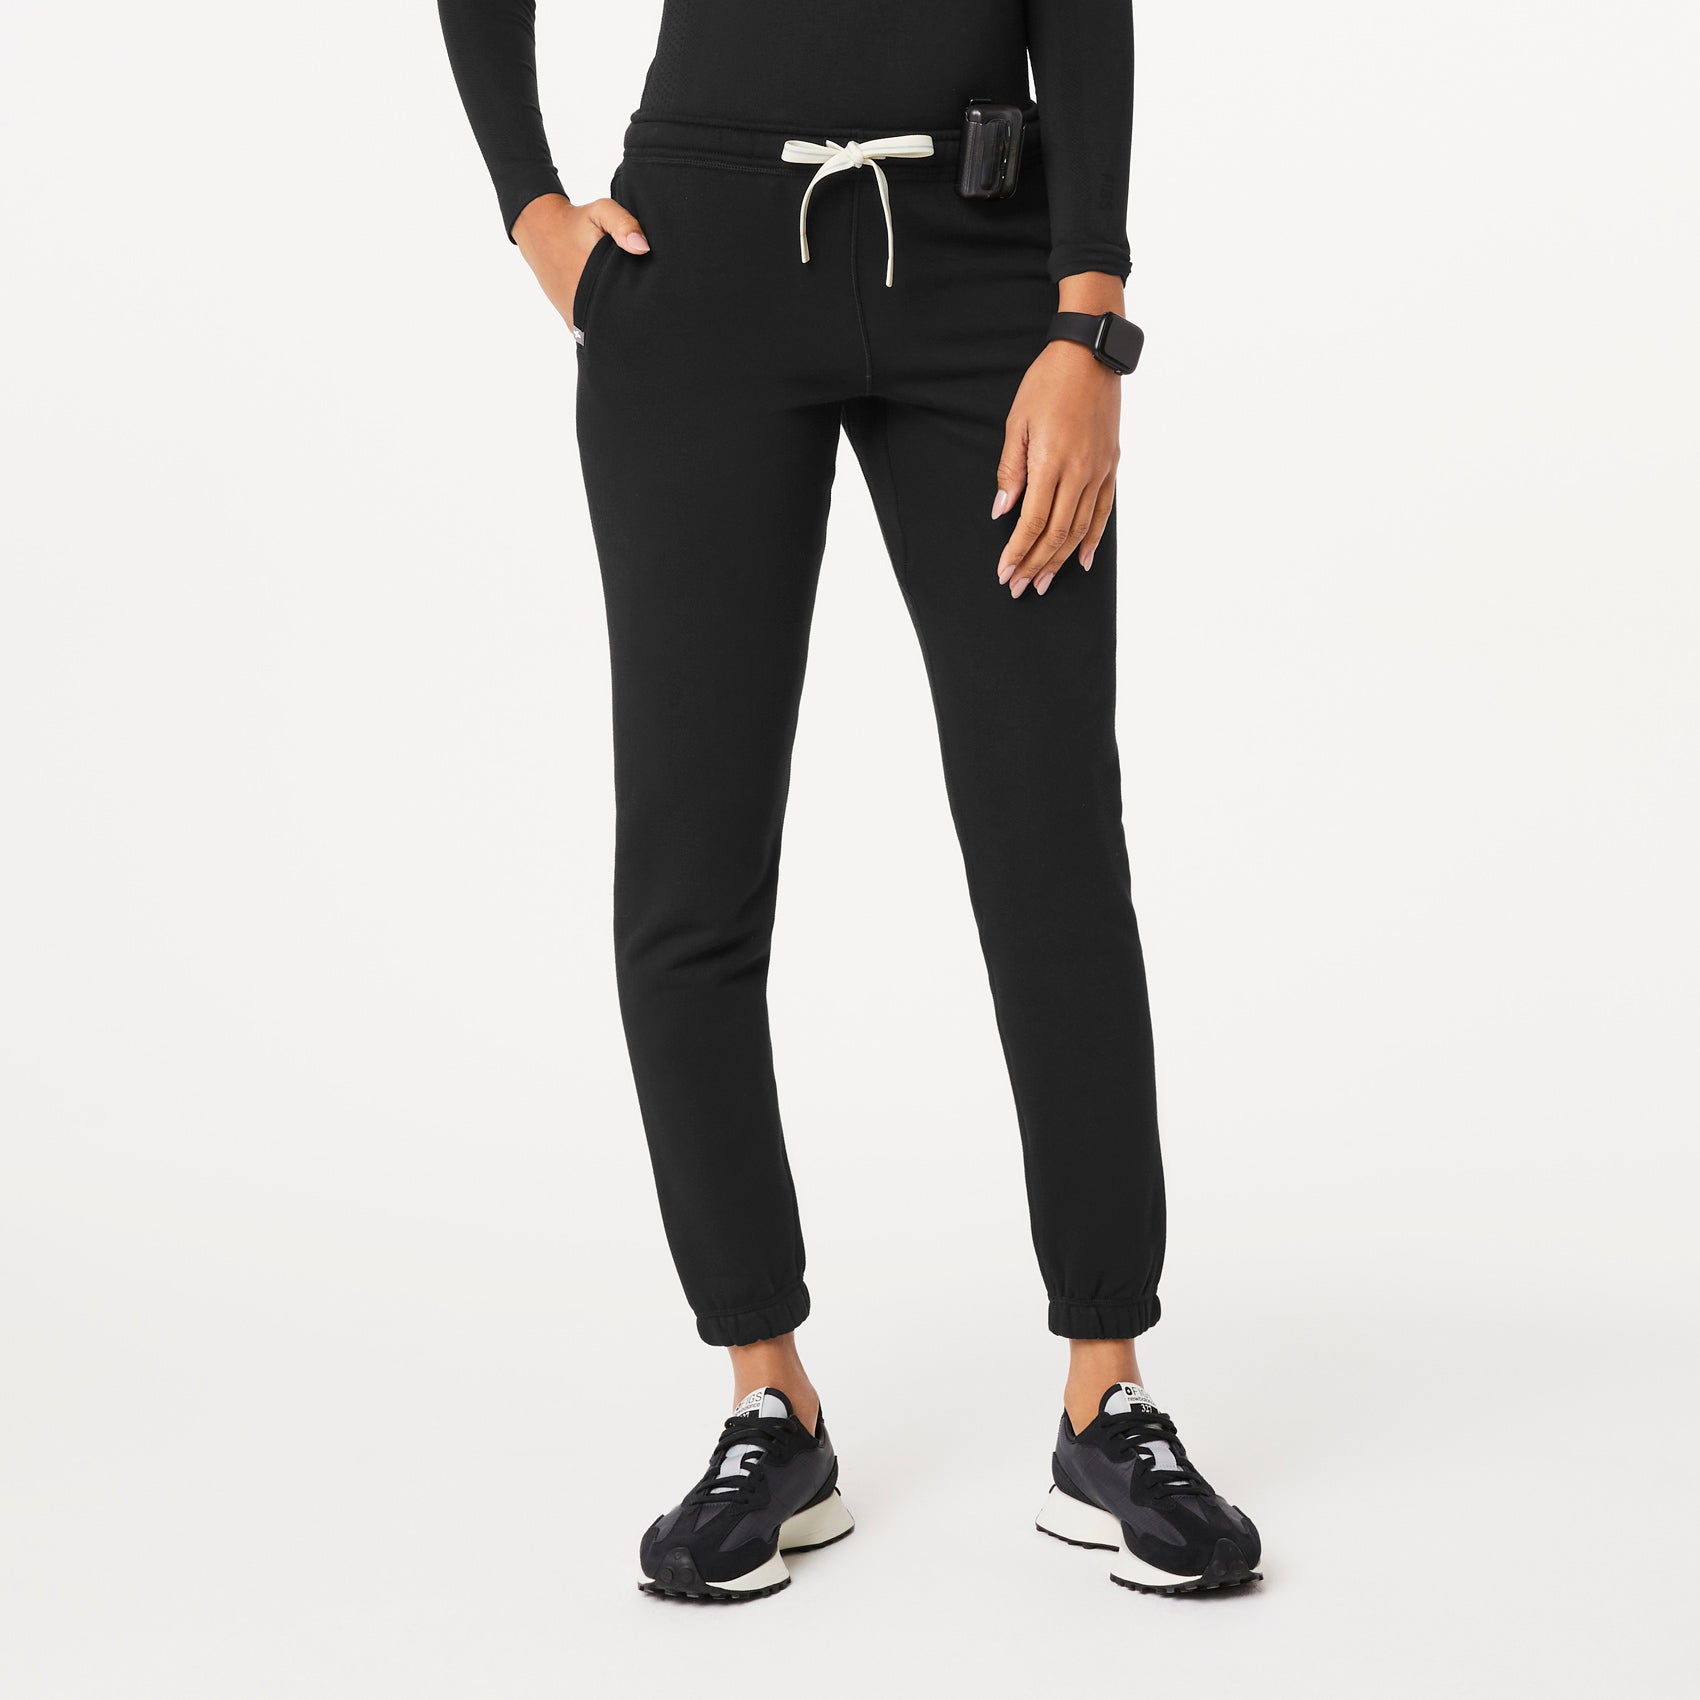 Street Sport Pantalones Deportivos Para Mujer K079 Con Costura Negra, Mode  de Mujer